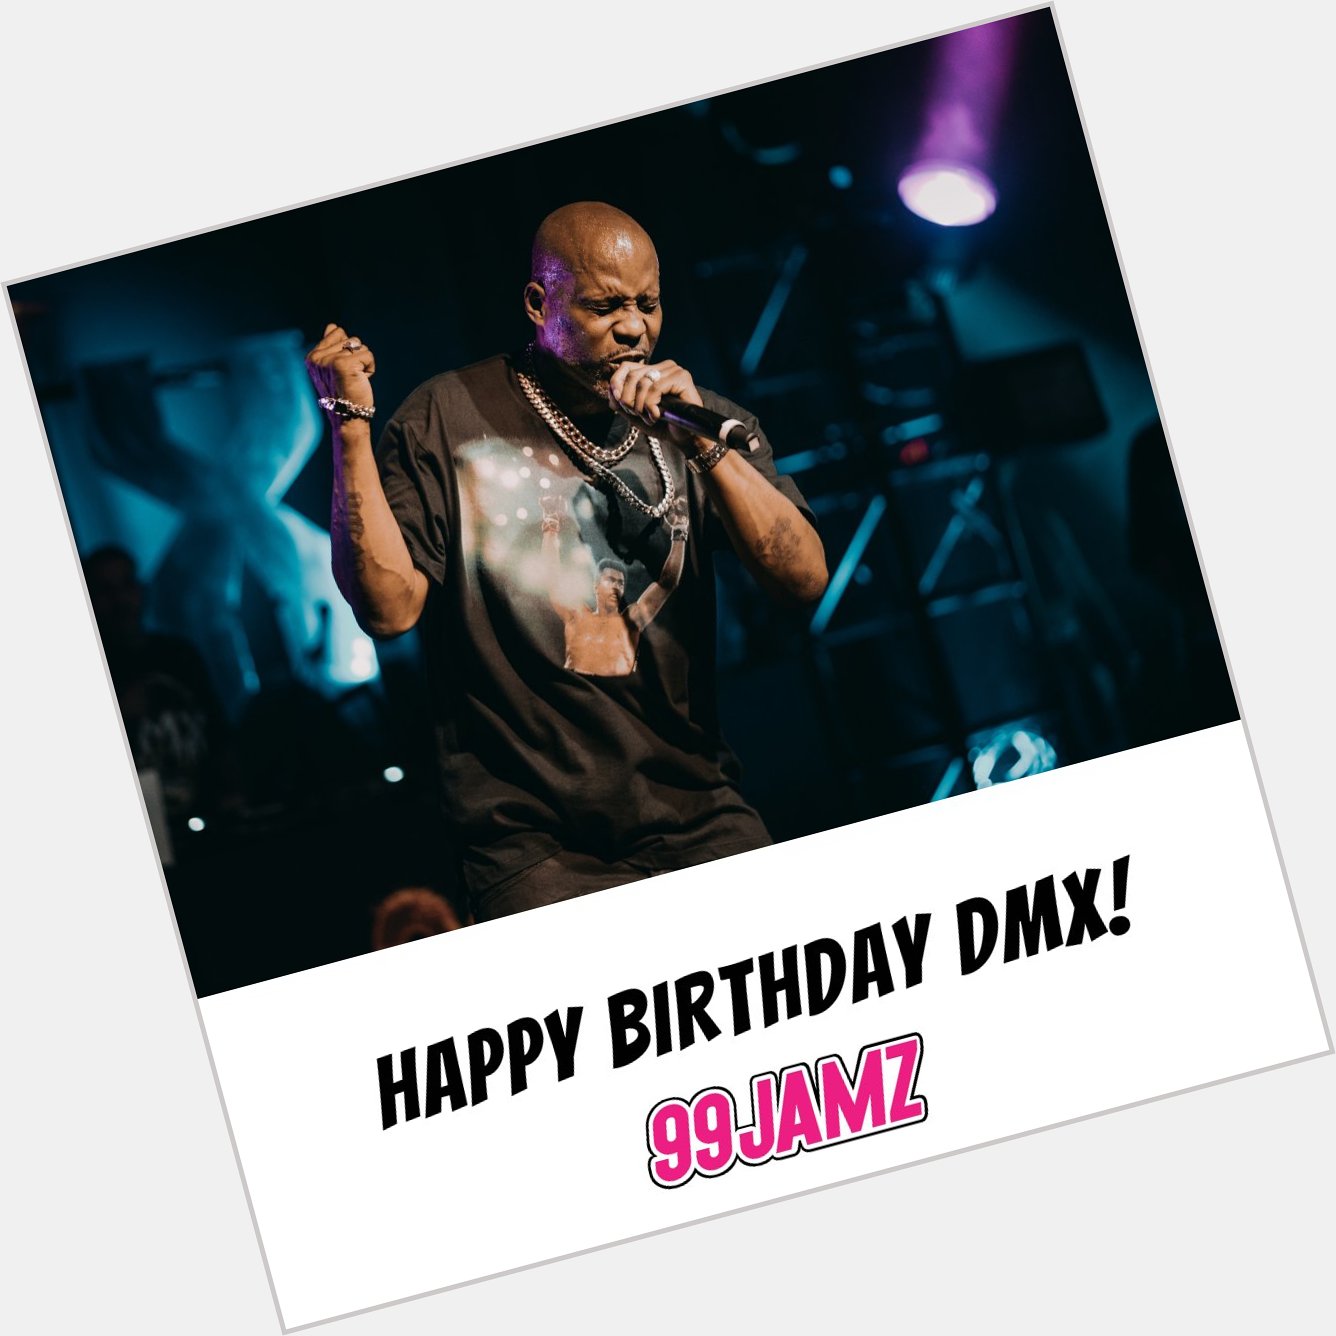 Happy 50th Birthday to Fun fact: DMX stands for Dark Man X. 